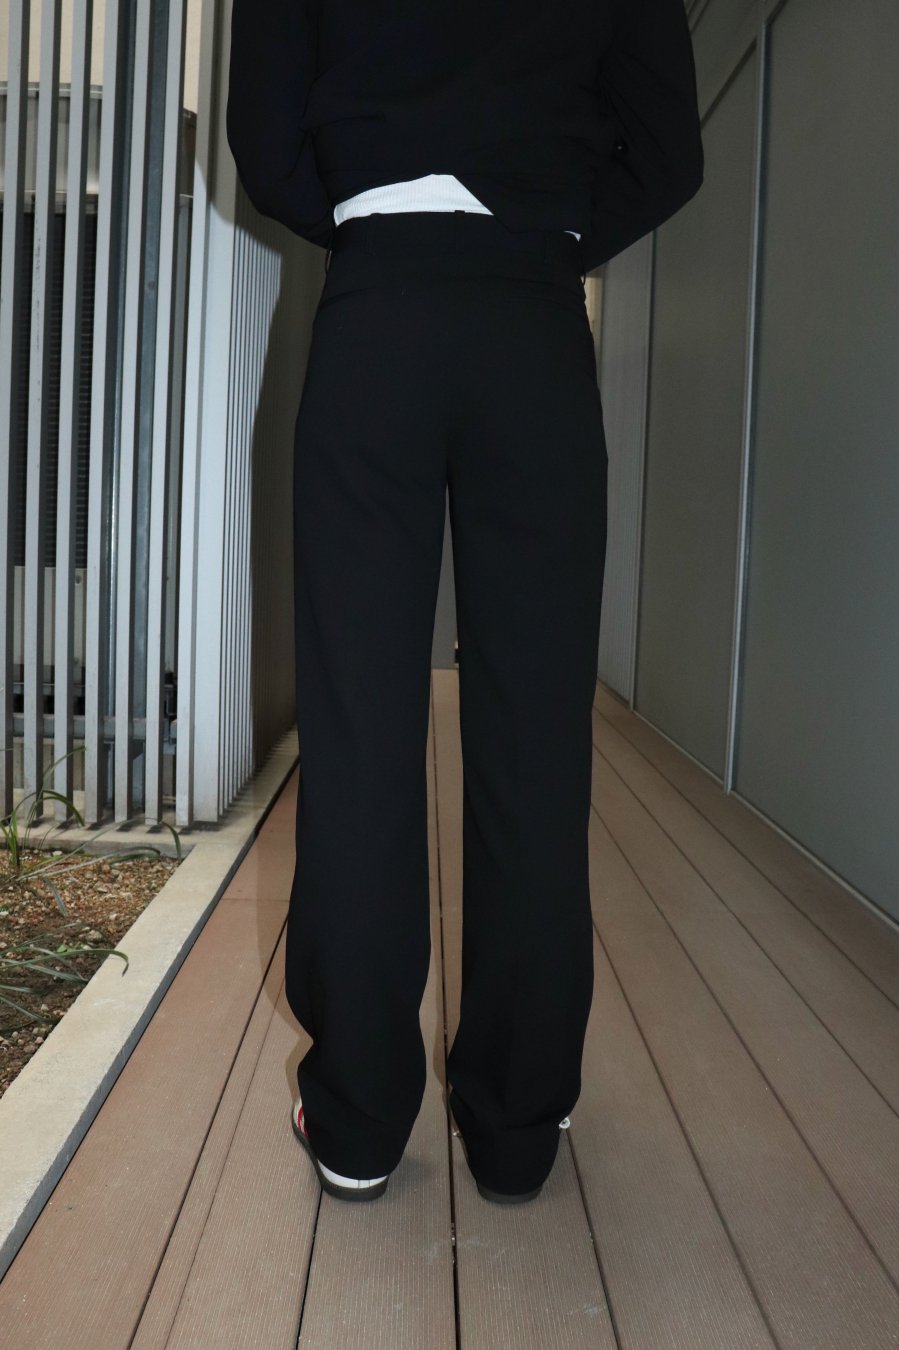 LITTLEBIG（リトルビッグ）のStraight Trousers Black or Beigeの通販サイト-大阪 堀江 PALETTE art  alive（パレットアートアライヴ）-